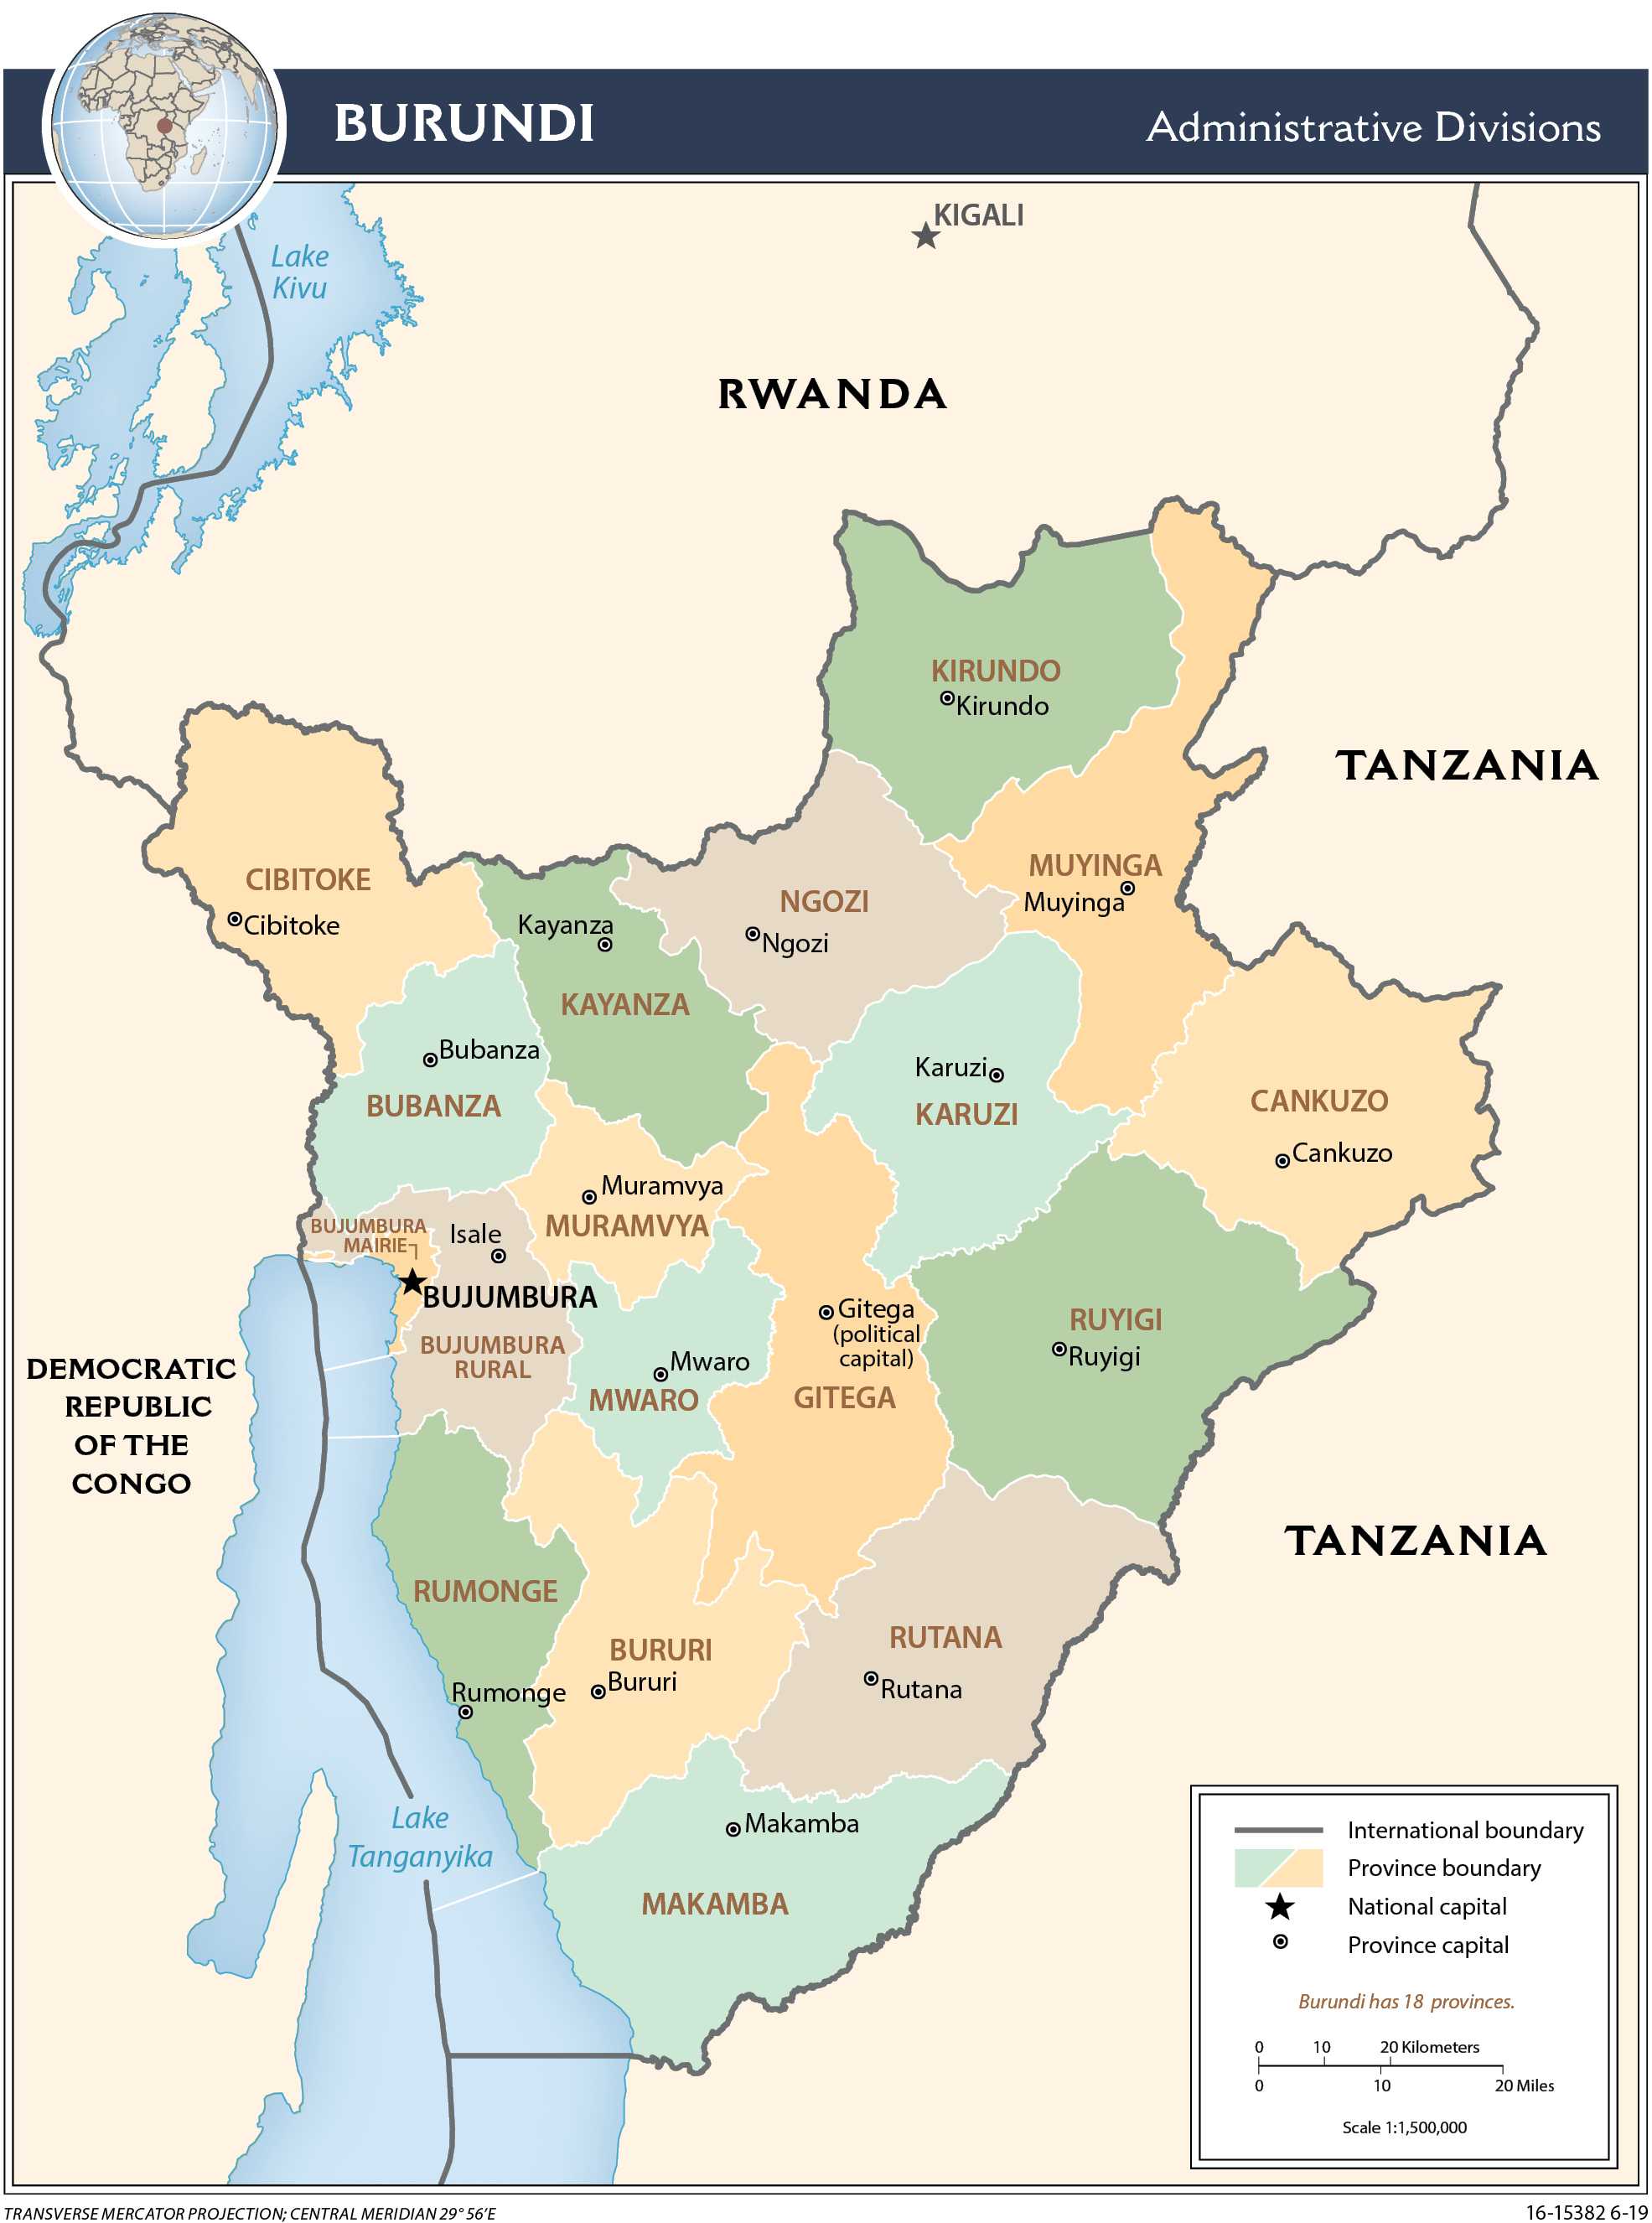 Administrative map of Burundi.